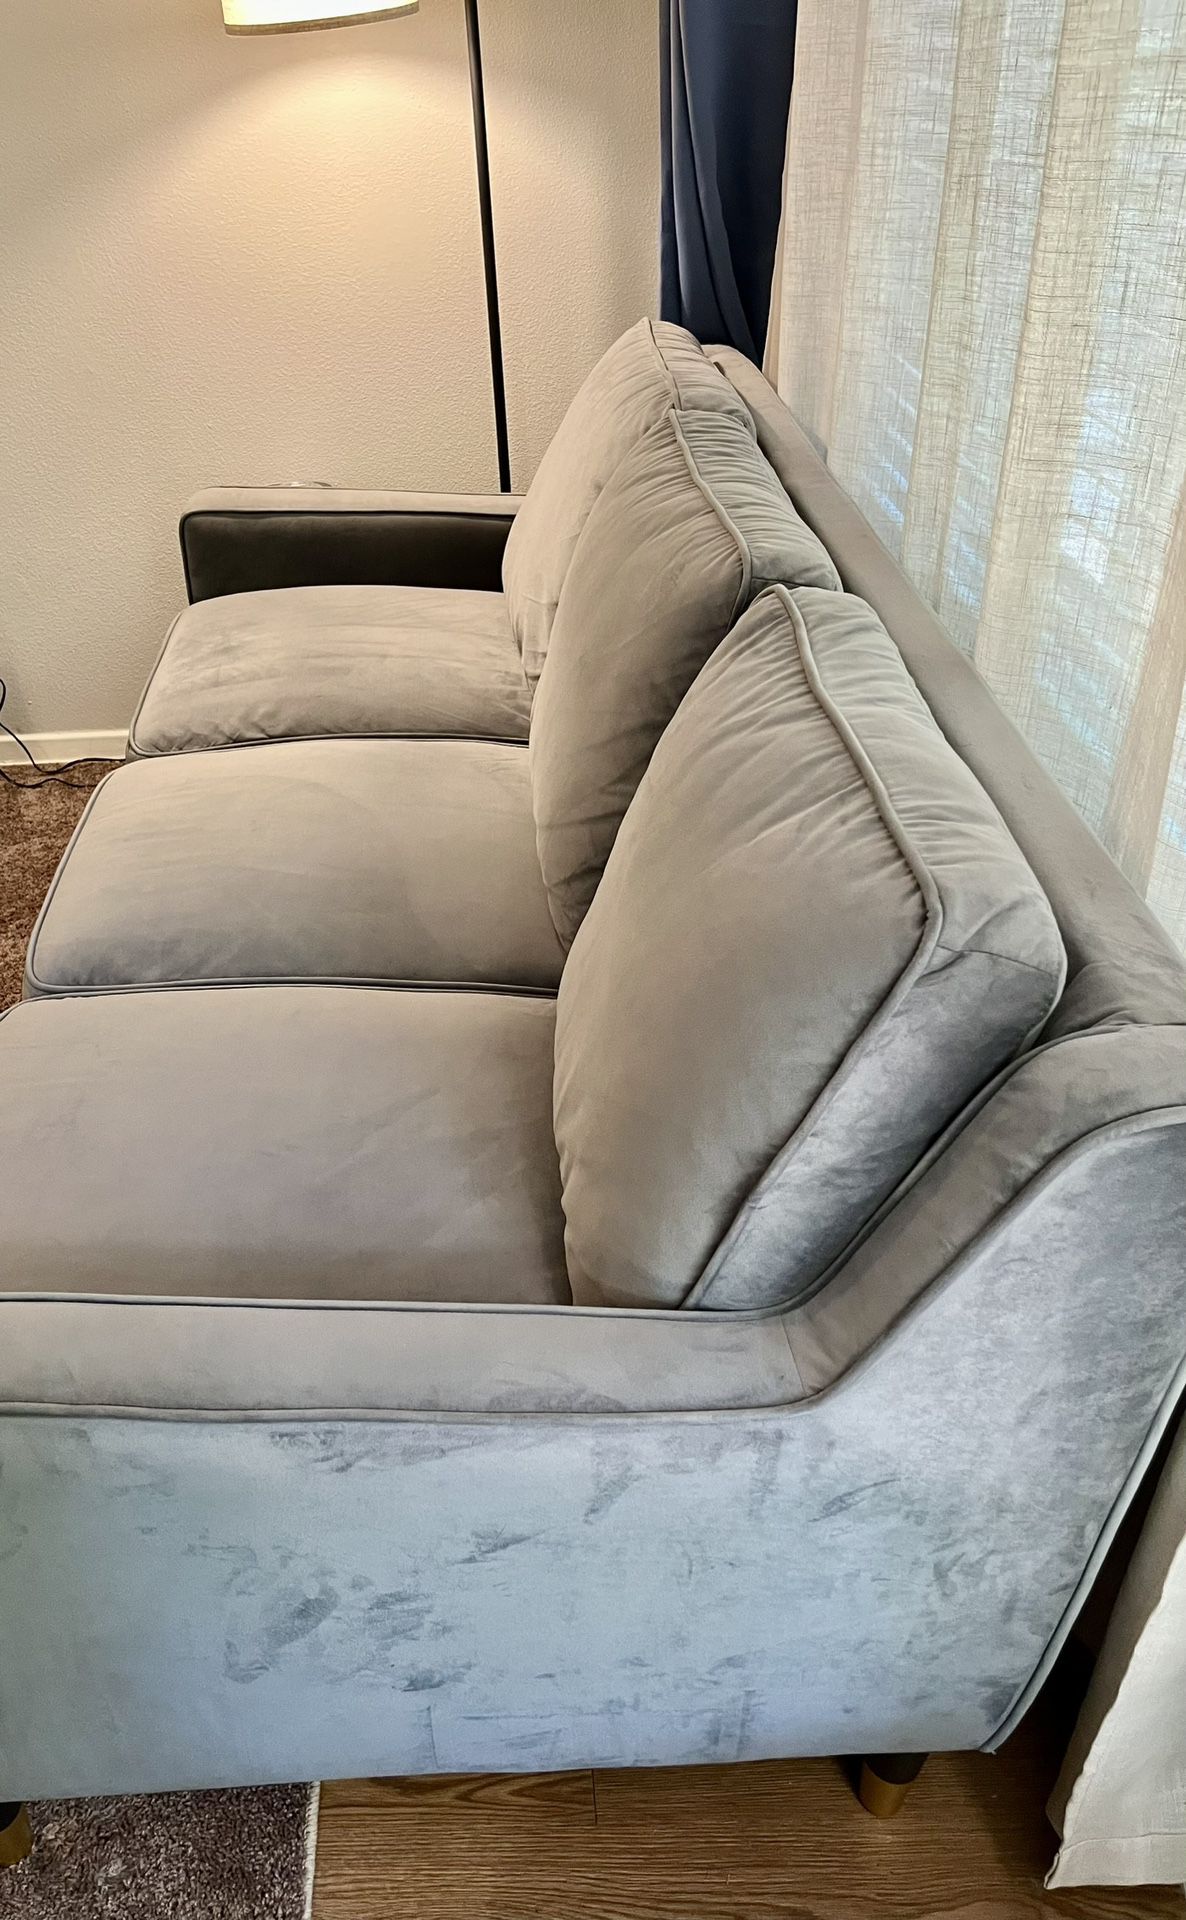 78" Upholstered Sofa by Mercury Row Grey (grey blue)